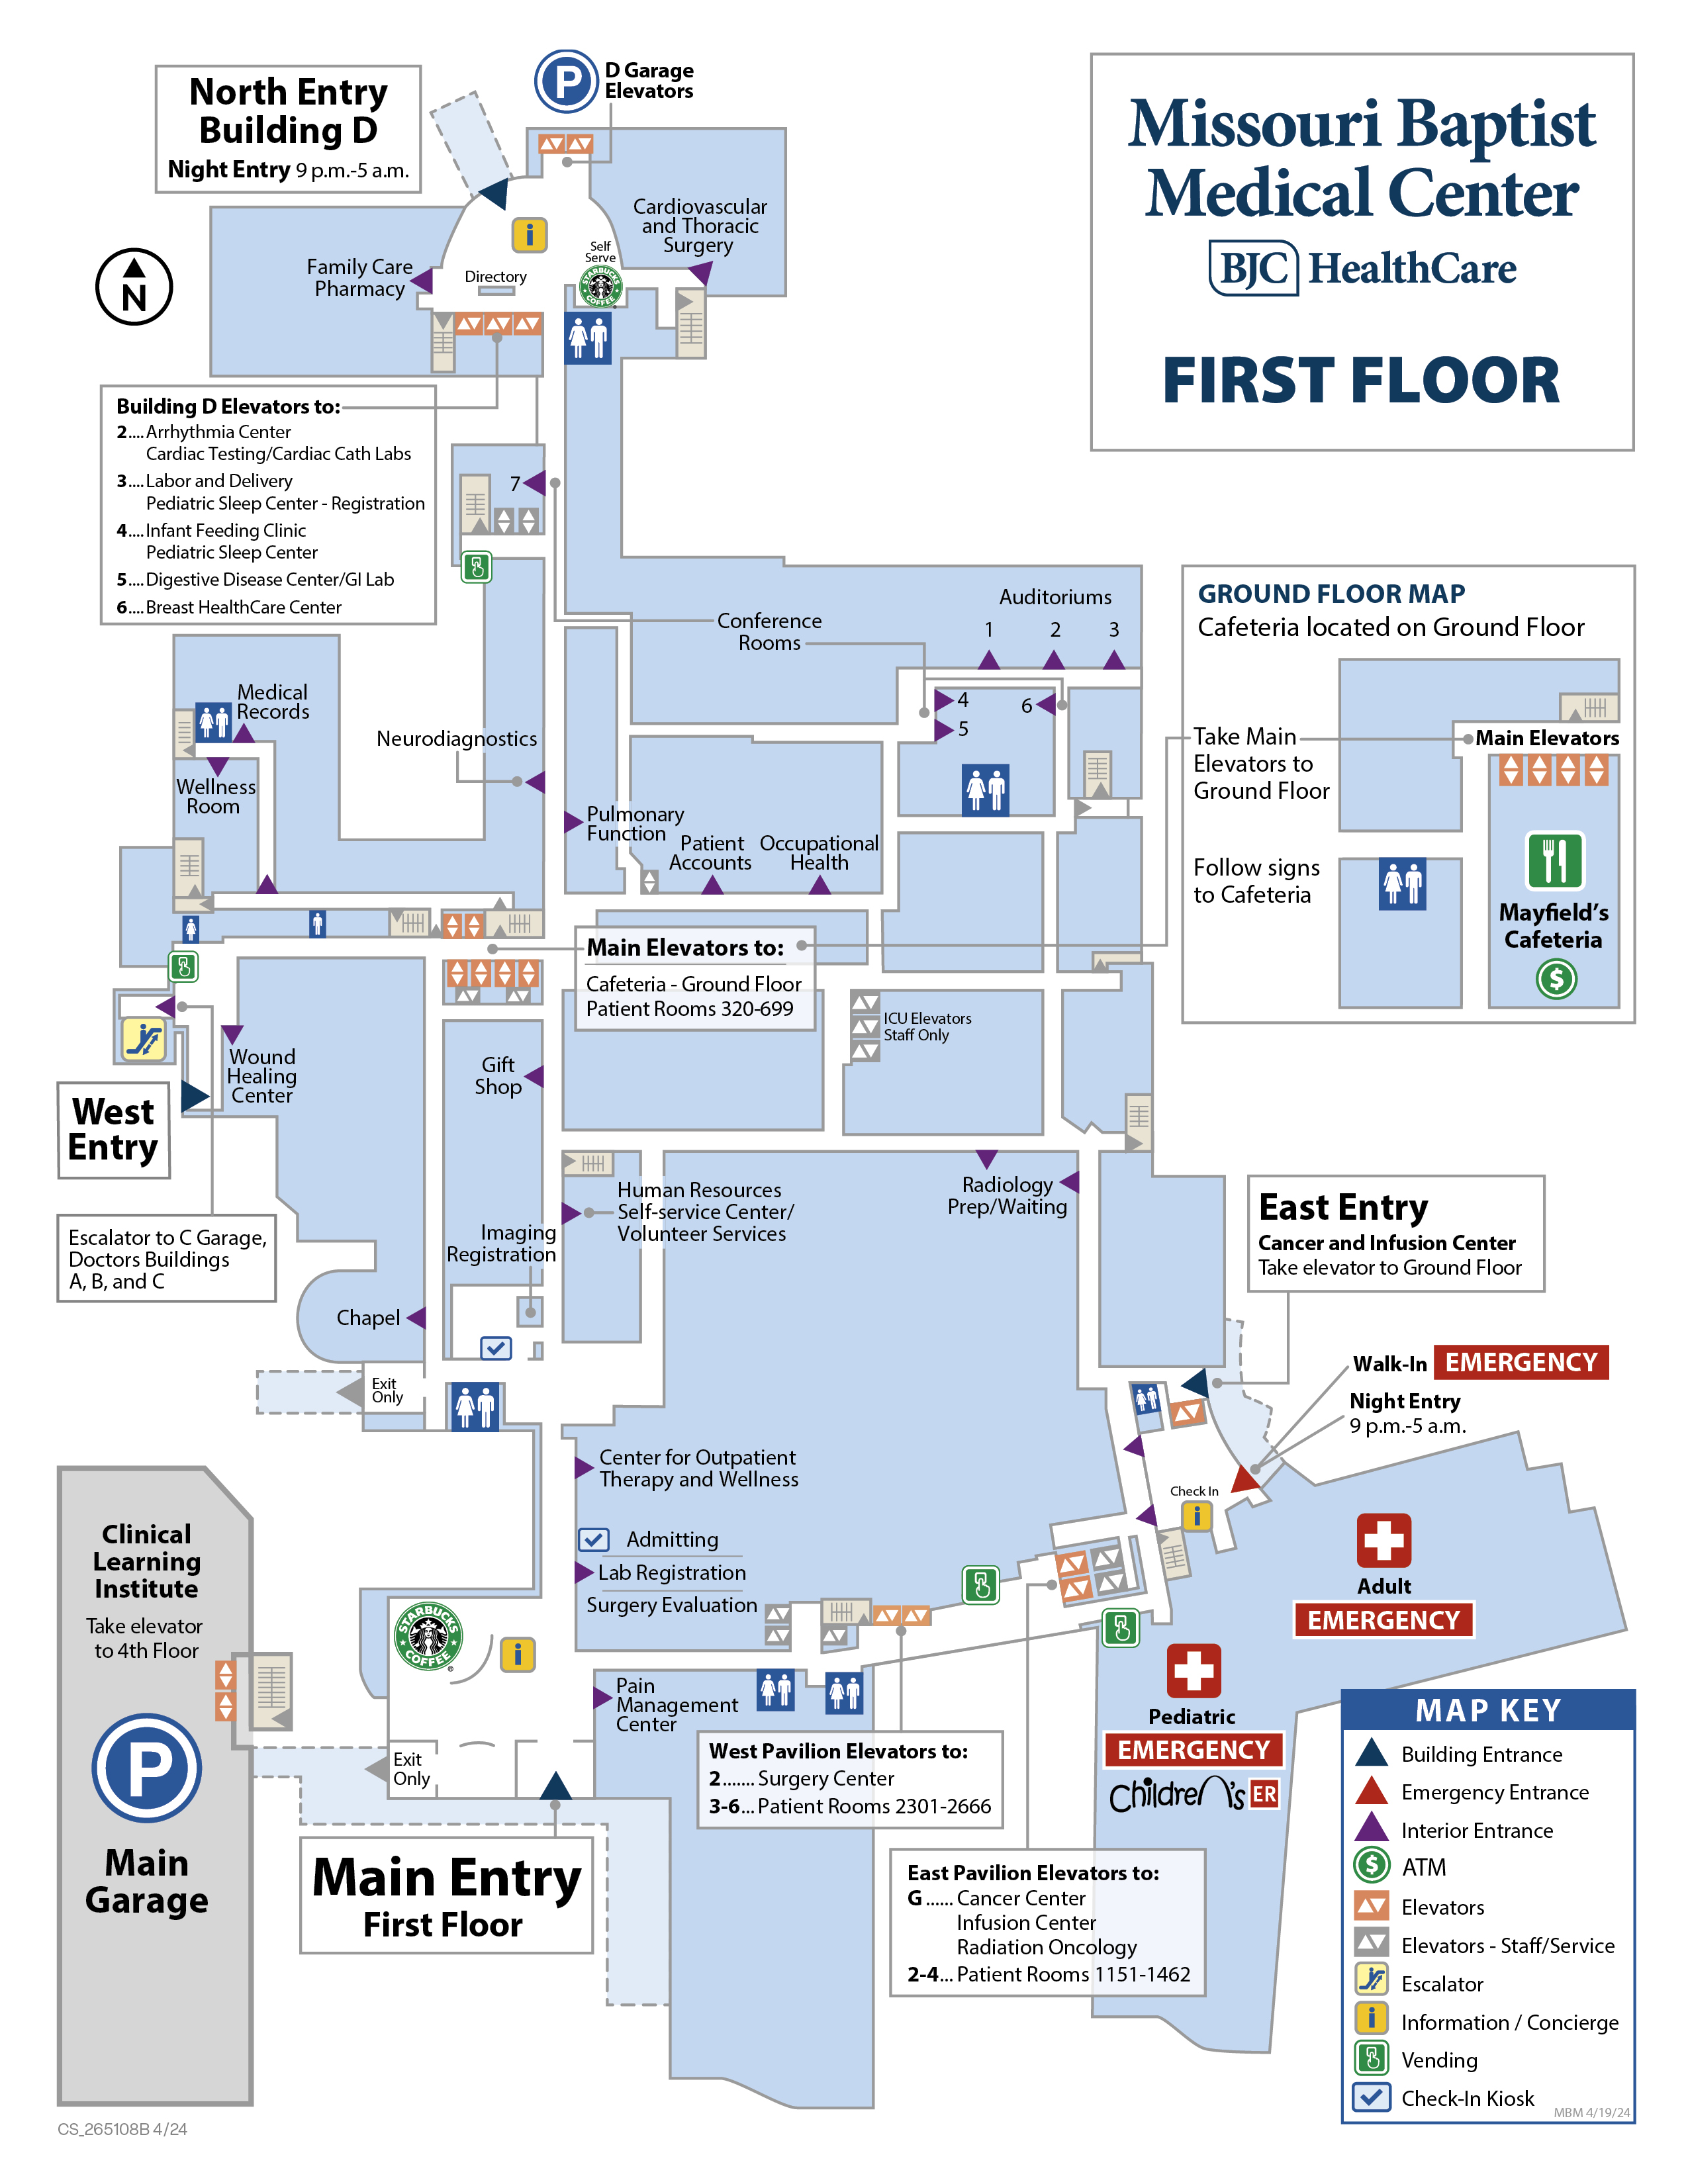 Missouri Baptist Medical Center First Floor Map